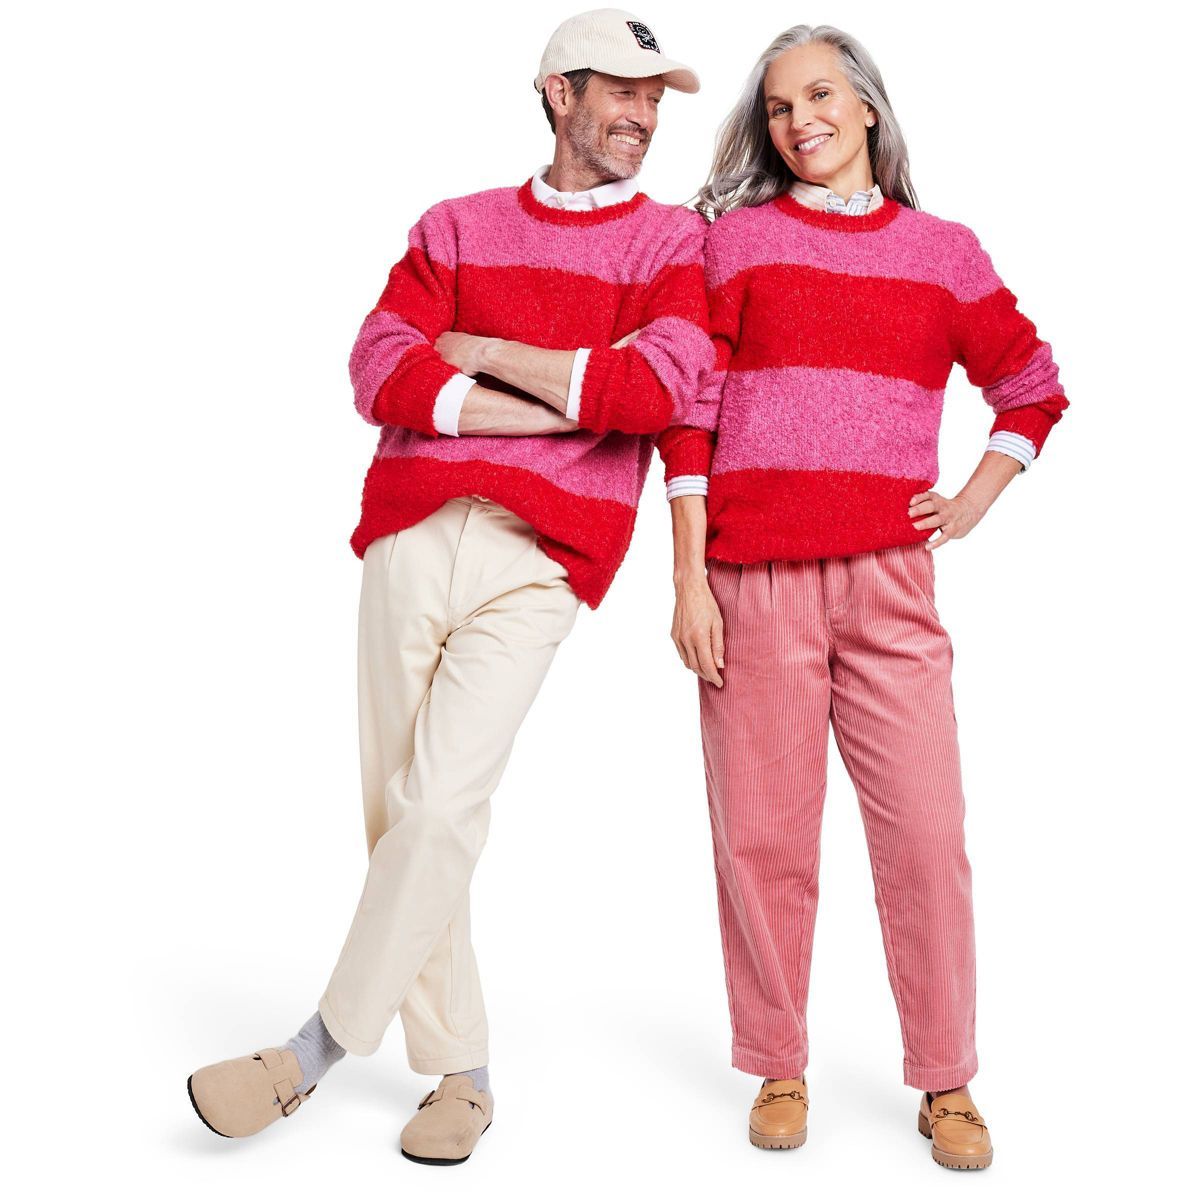 Adult Rugby Stripe Sweater - Rowing Blazers x Target | Target